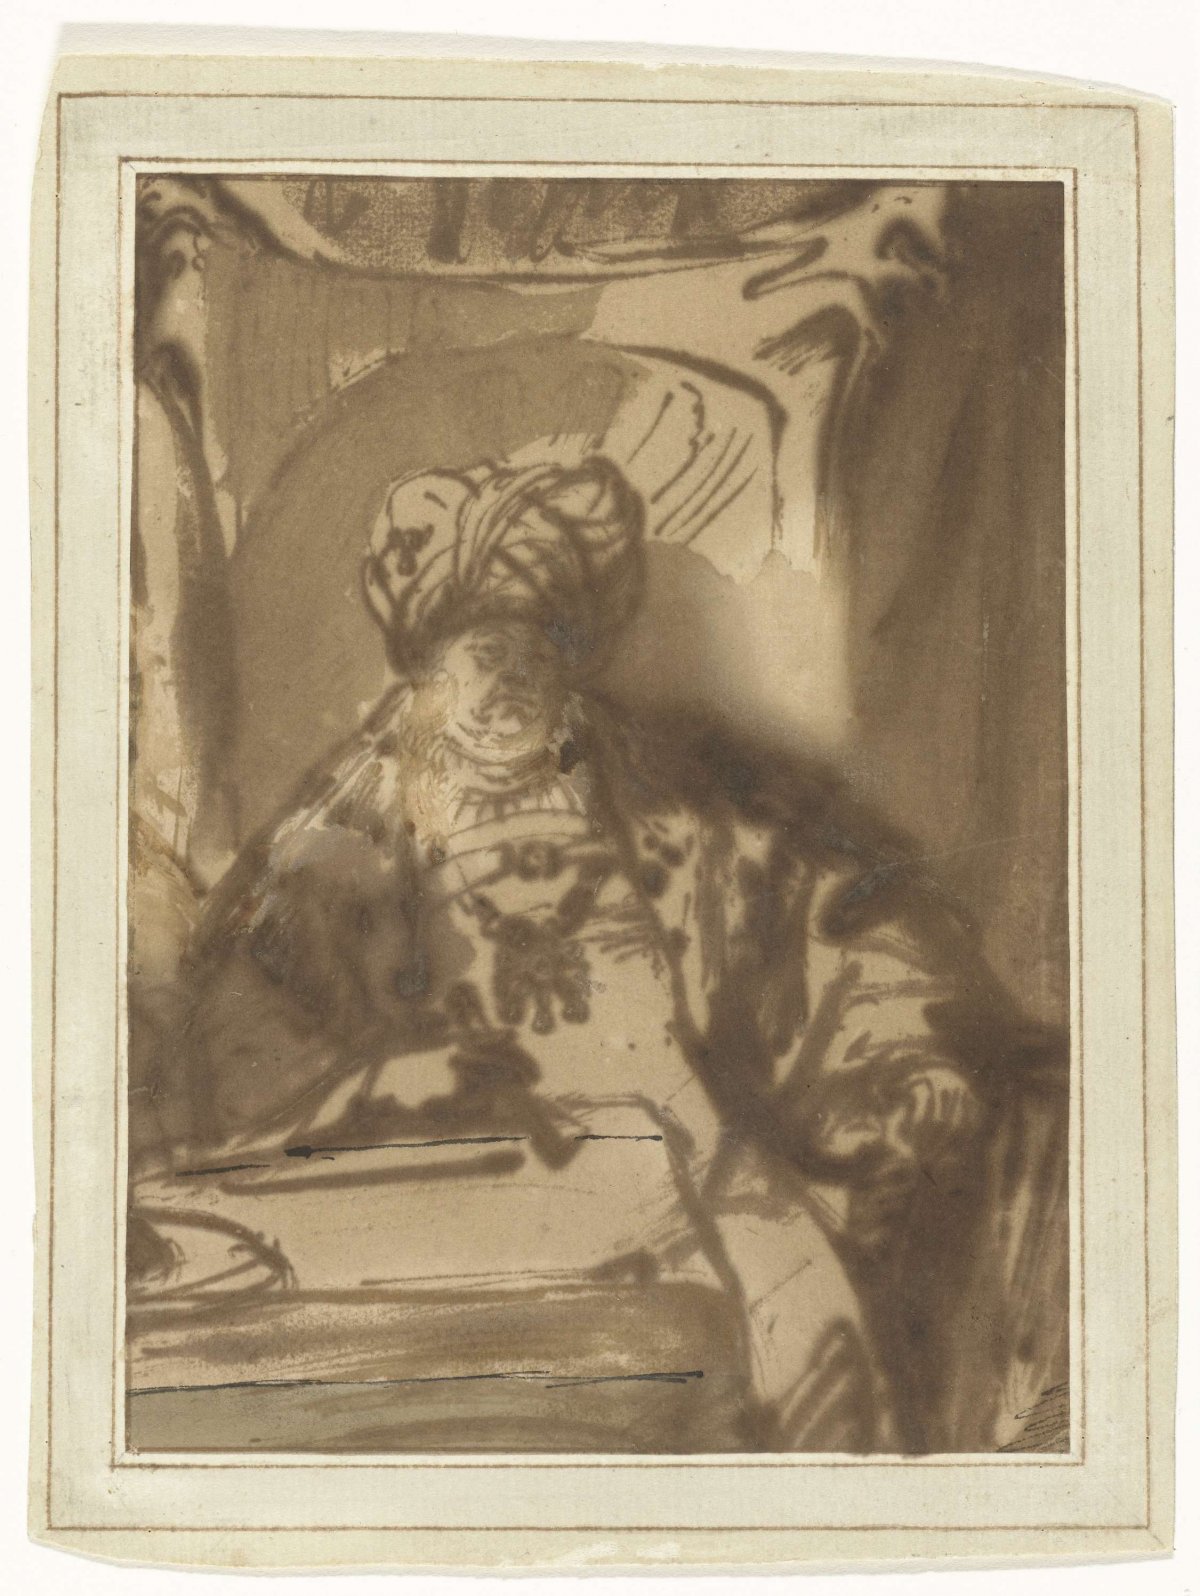 The Actor Willem Bartholsz Ruyter as King Ahasuerus on his Throne, Rembrandt van Rijn, c. 1635 - c. 1640